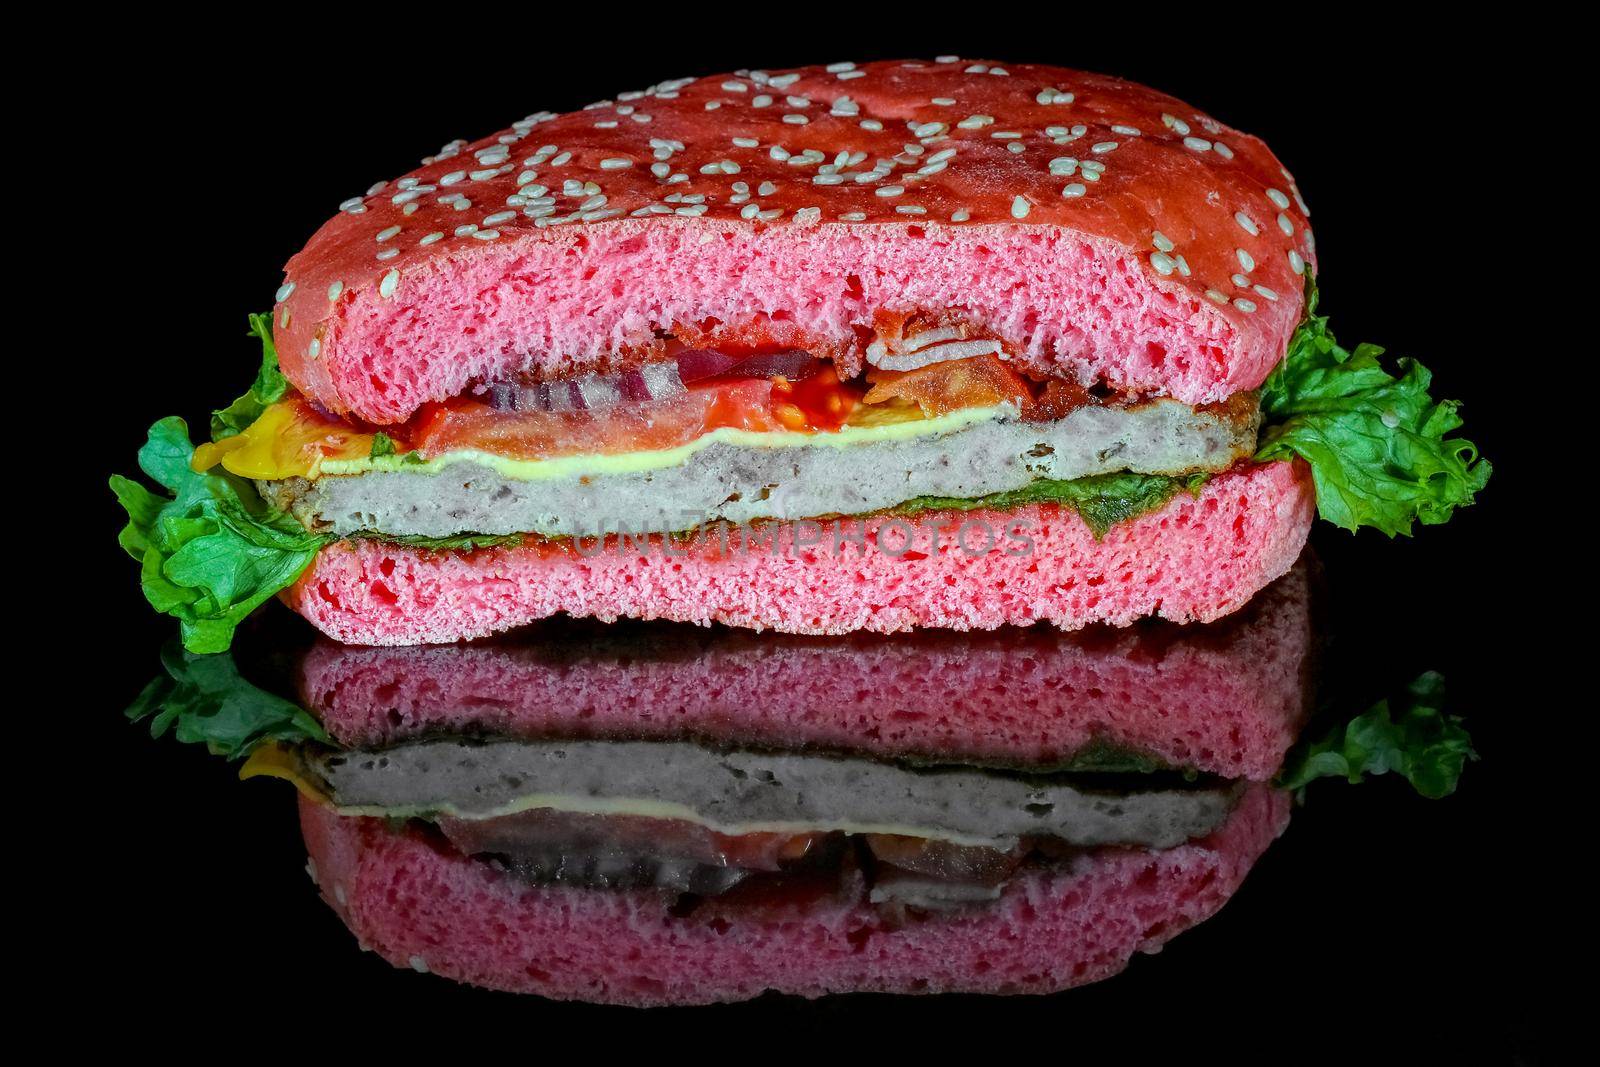 red hamburger on a black background. macro by roman112007